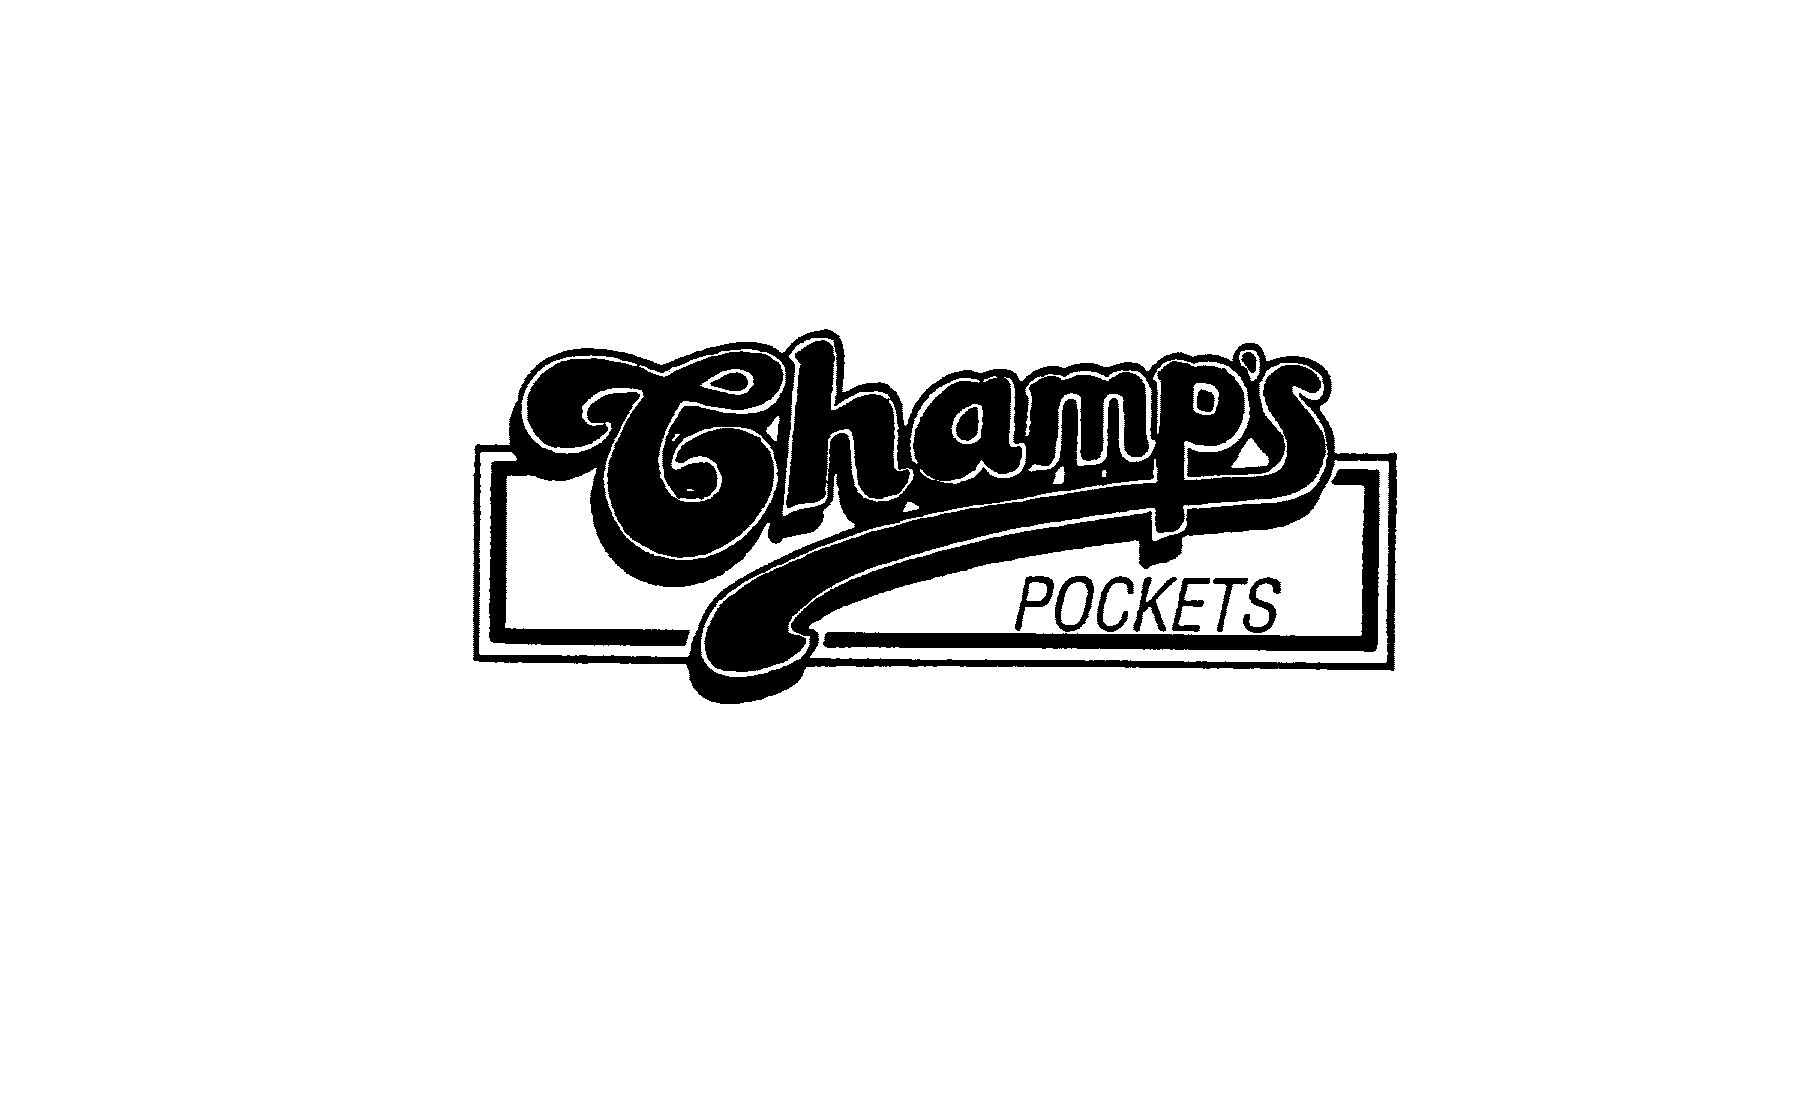  CHAMP'S POCKETS